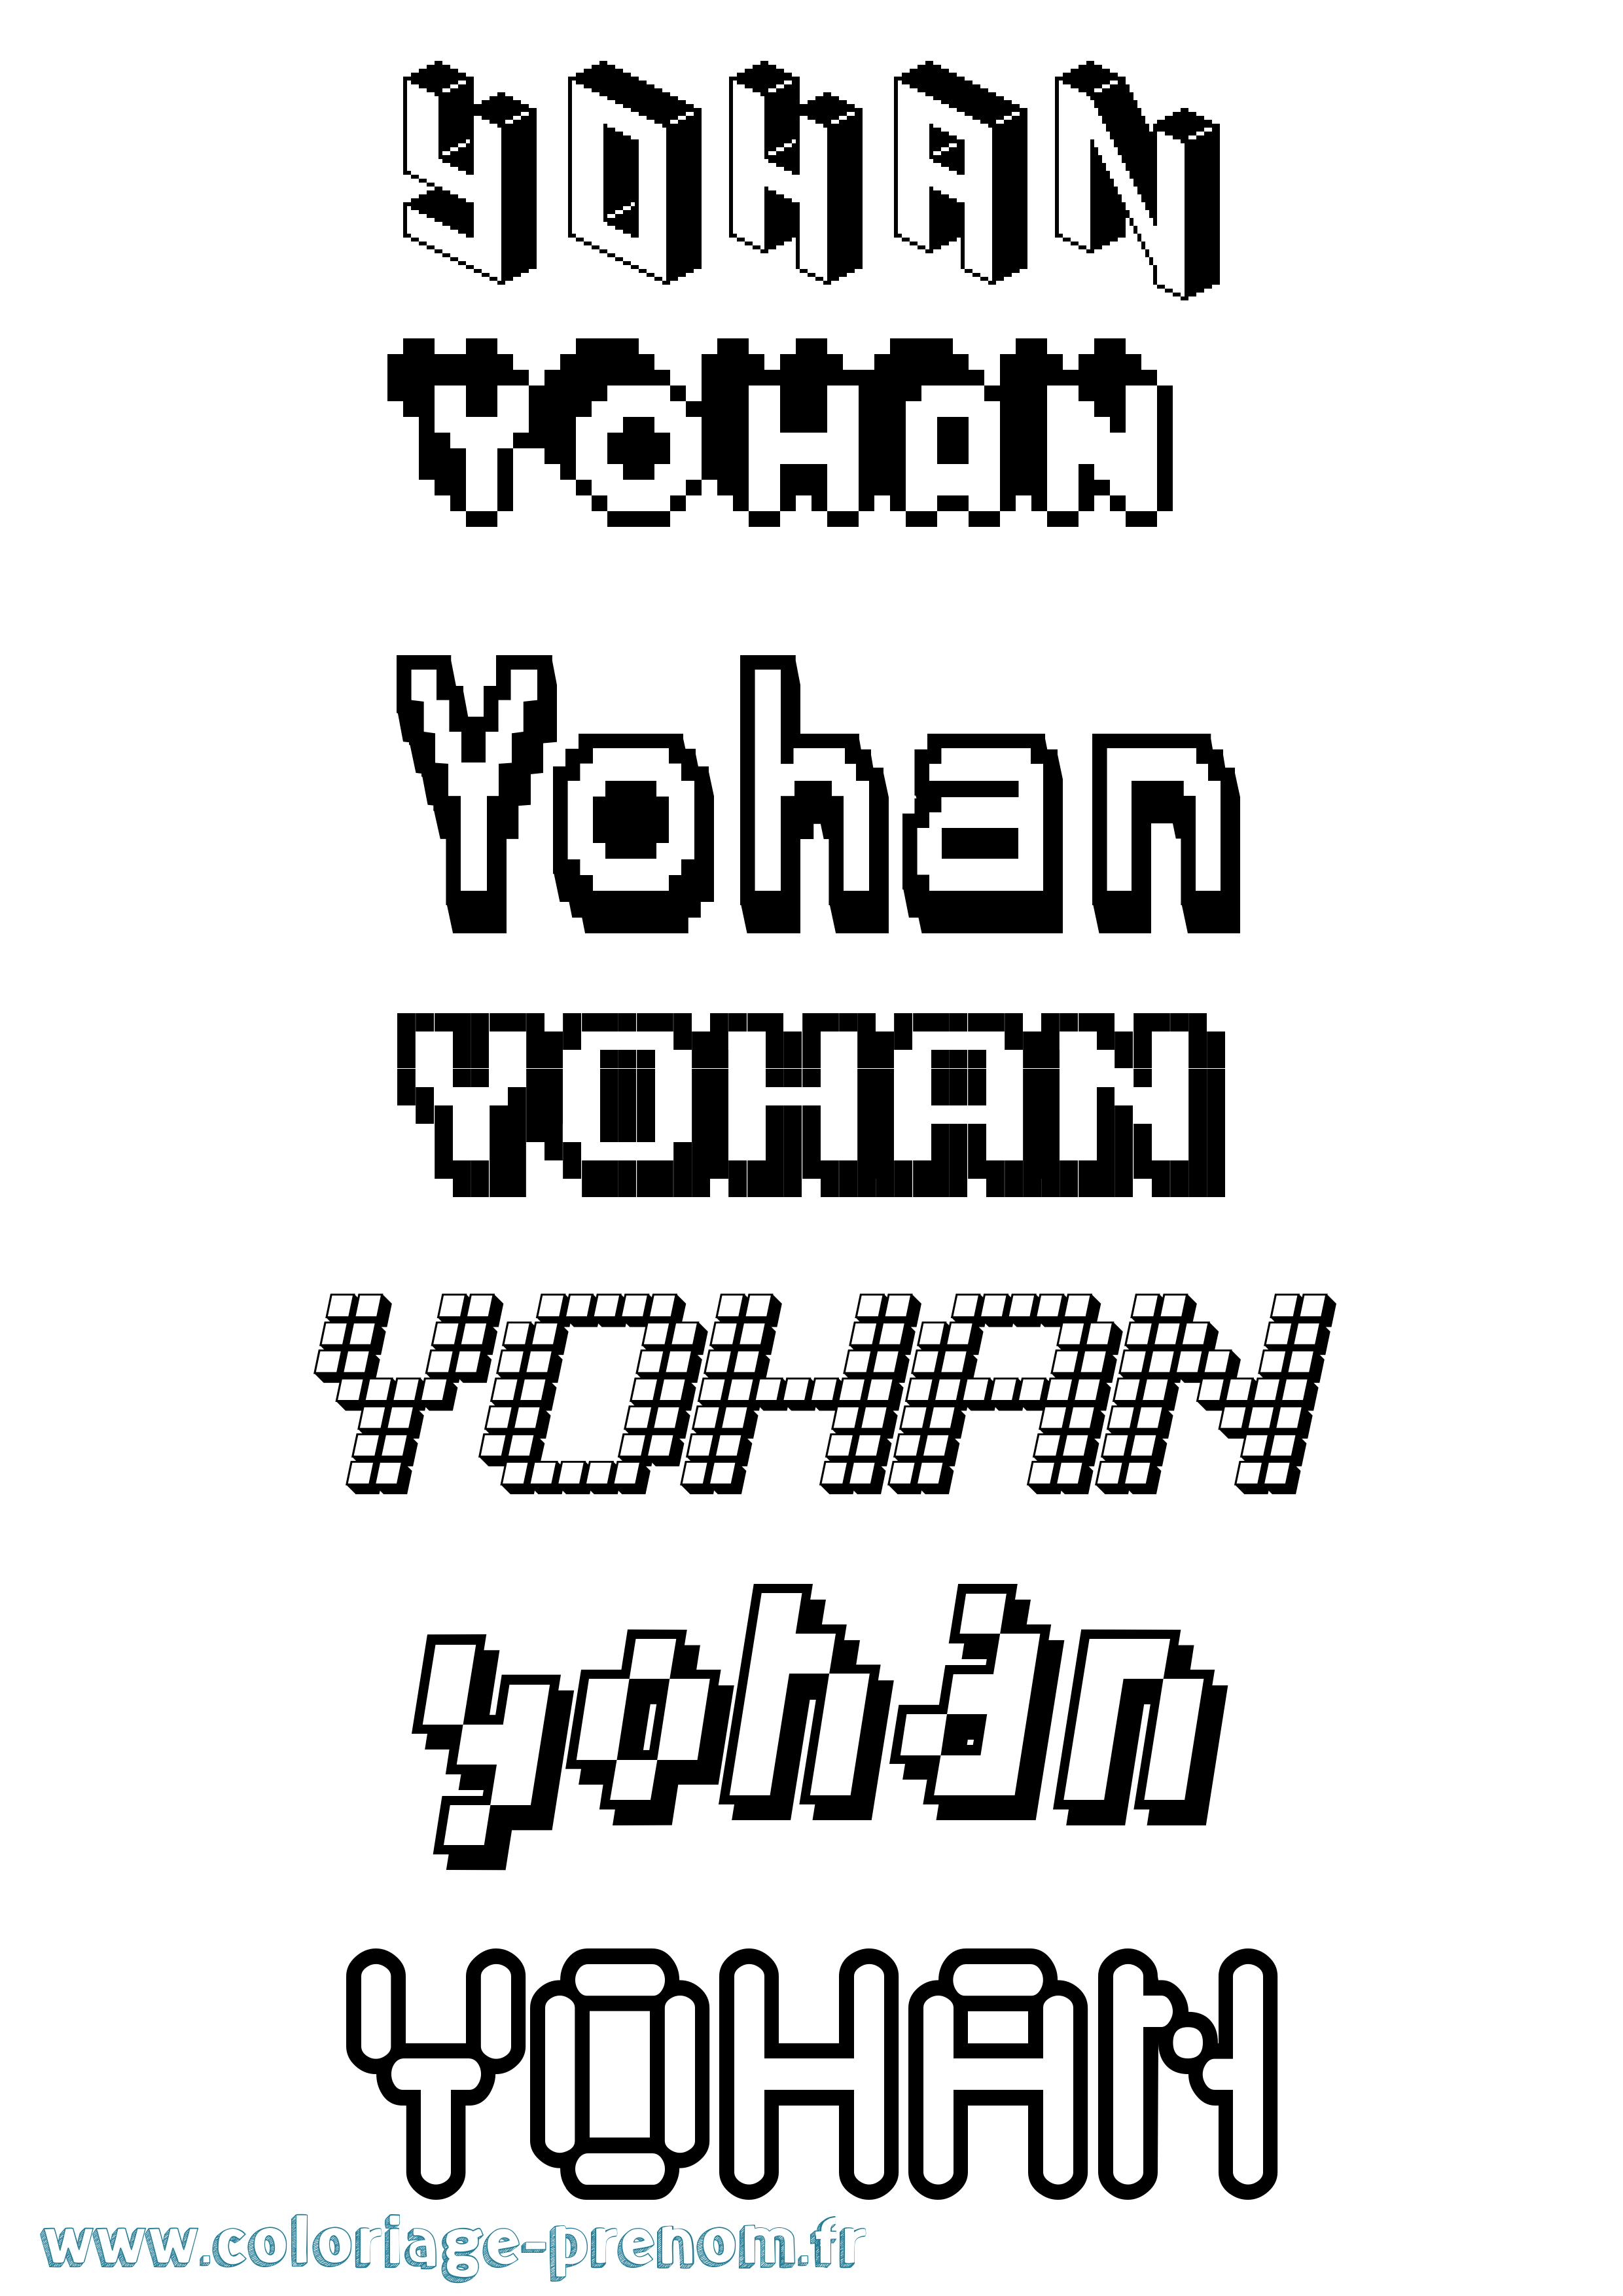 Coloriage prénom Yohan Pixel